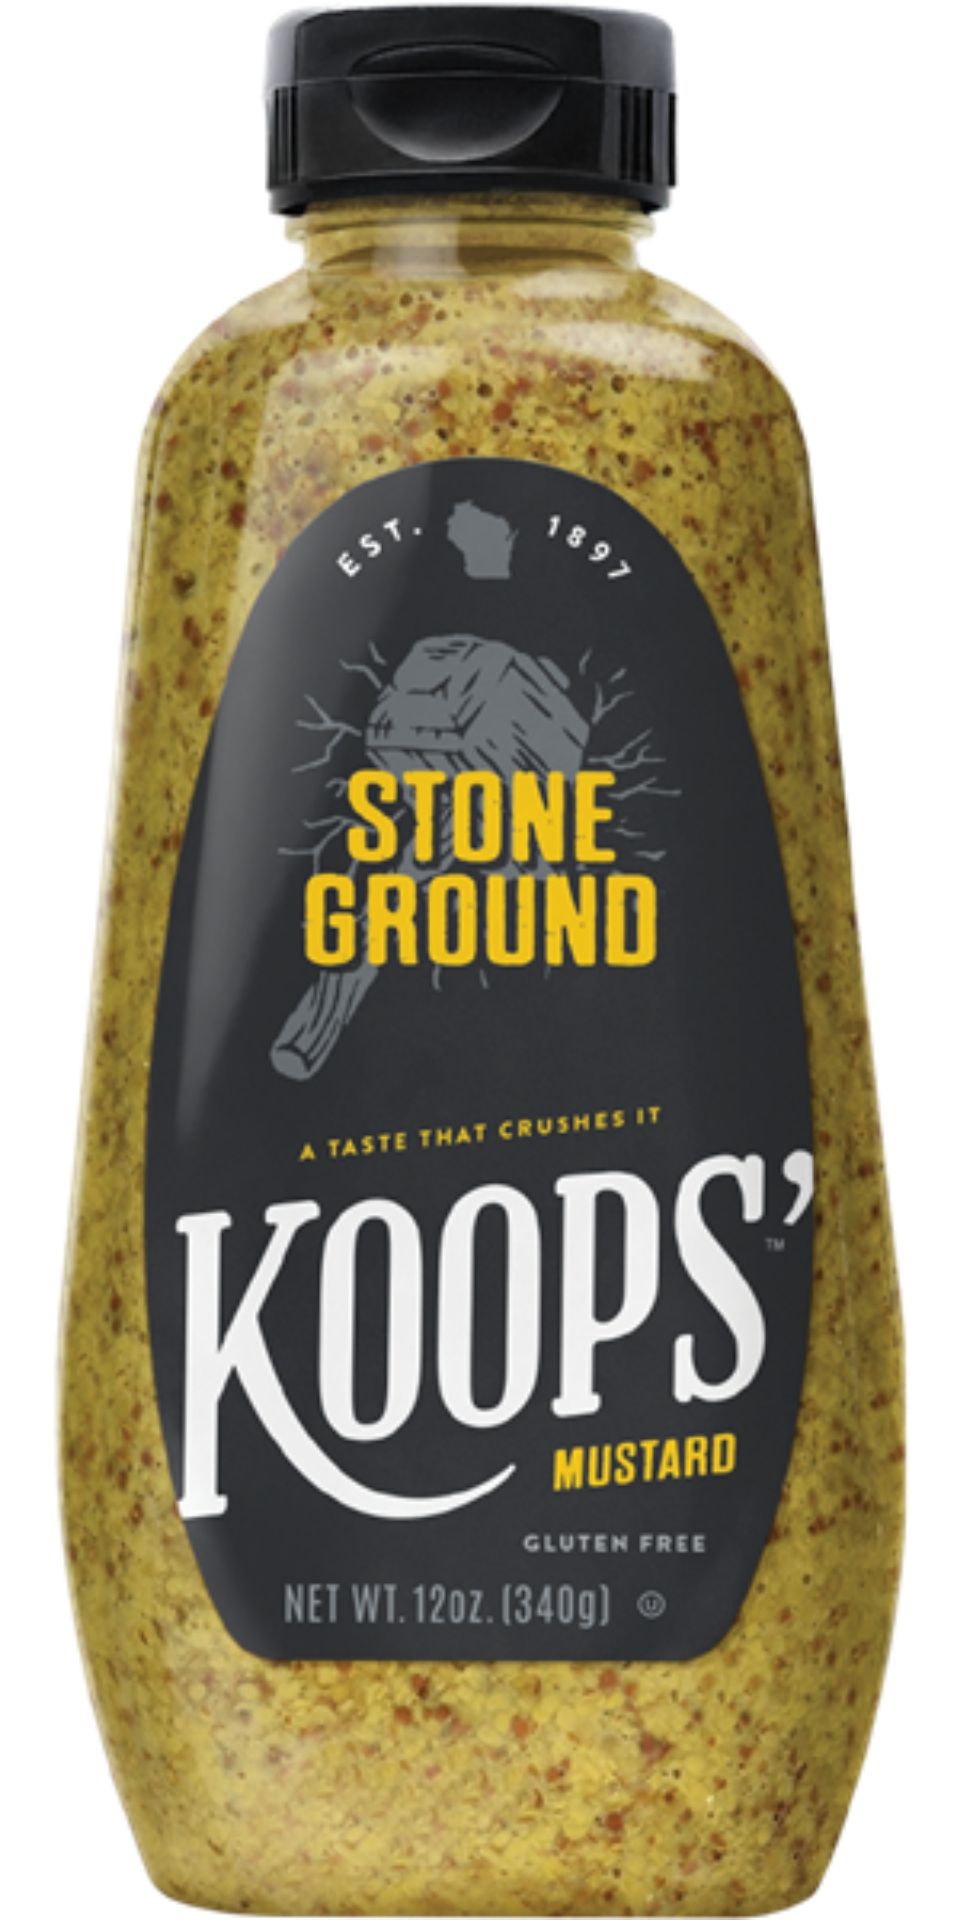 koops' stone ground mustard